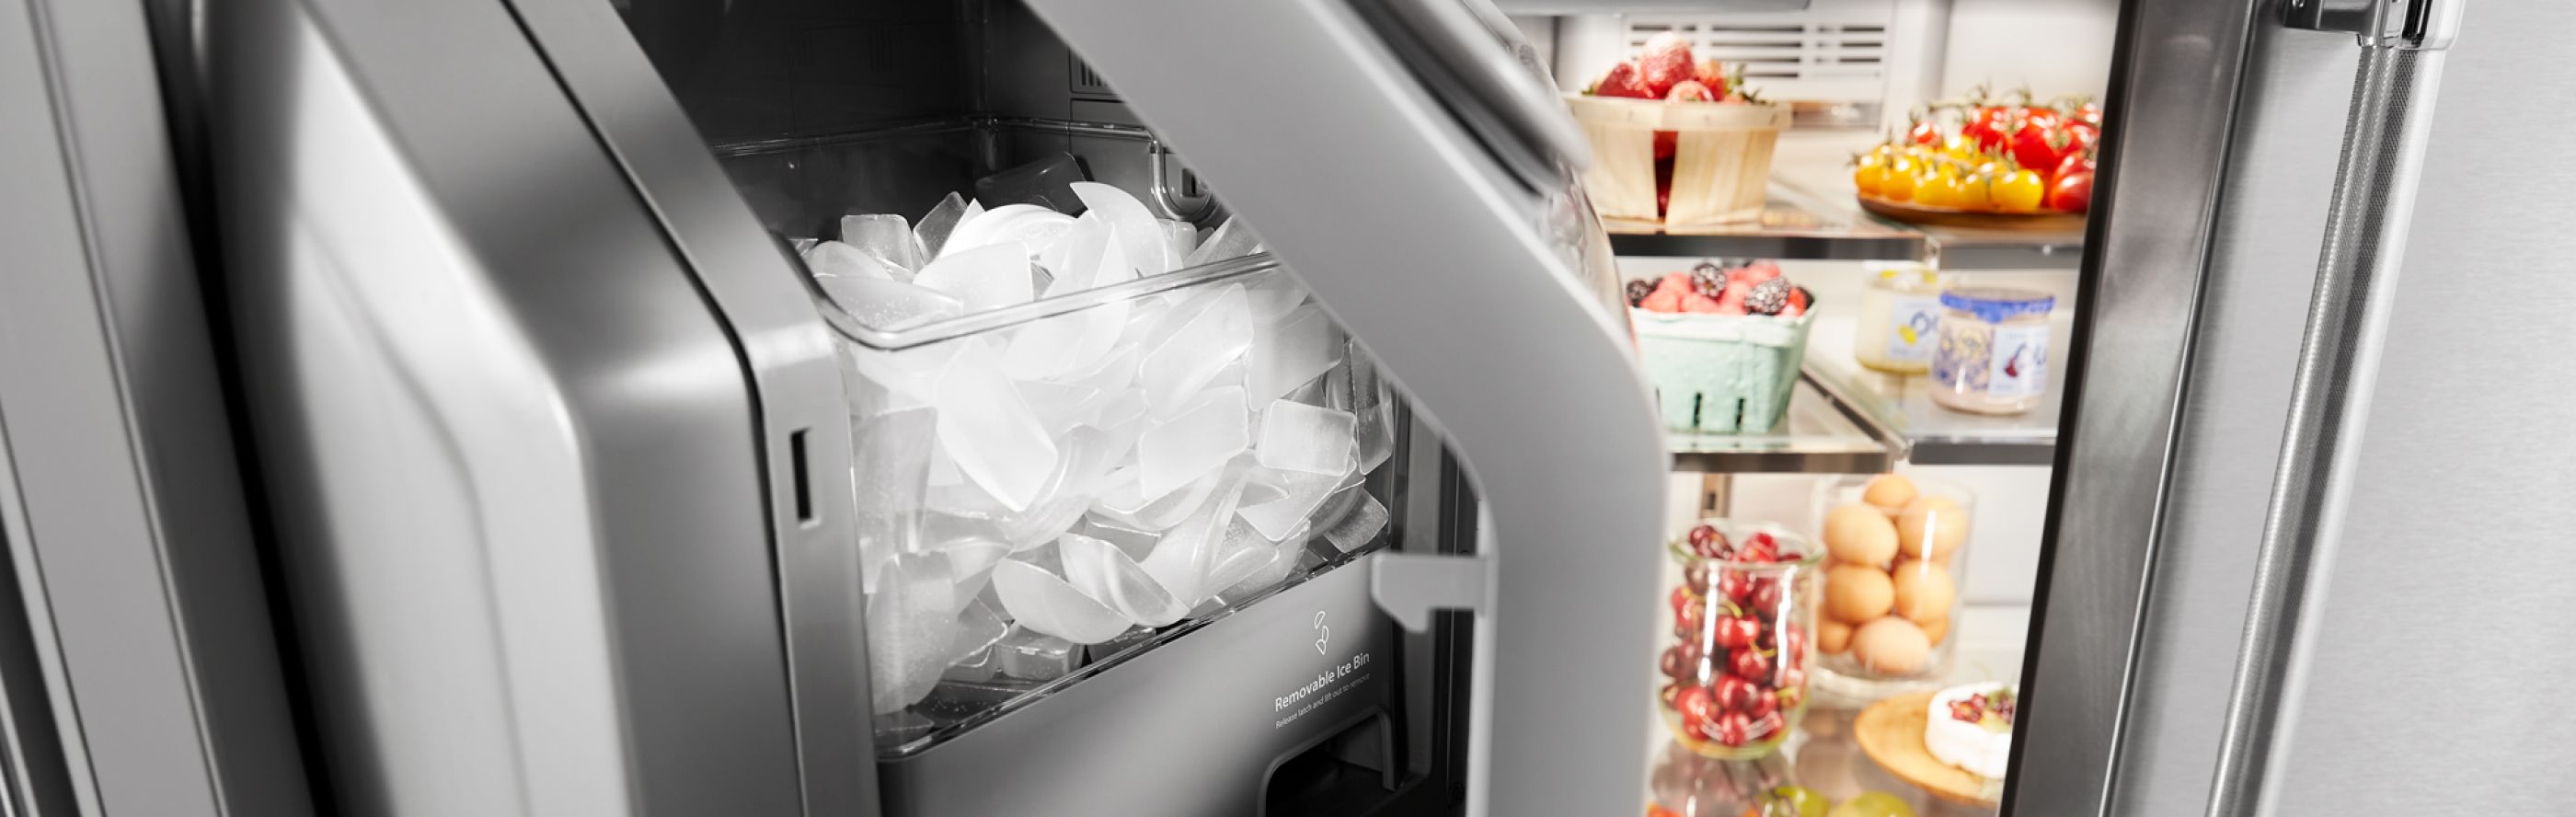 Close up of a refrigerator ice maker 